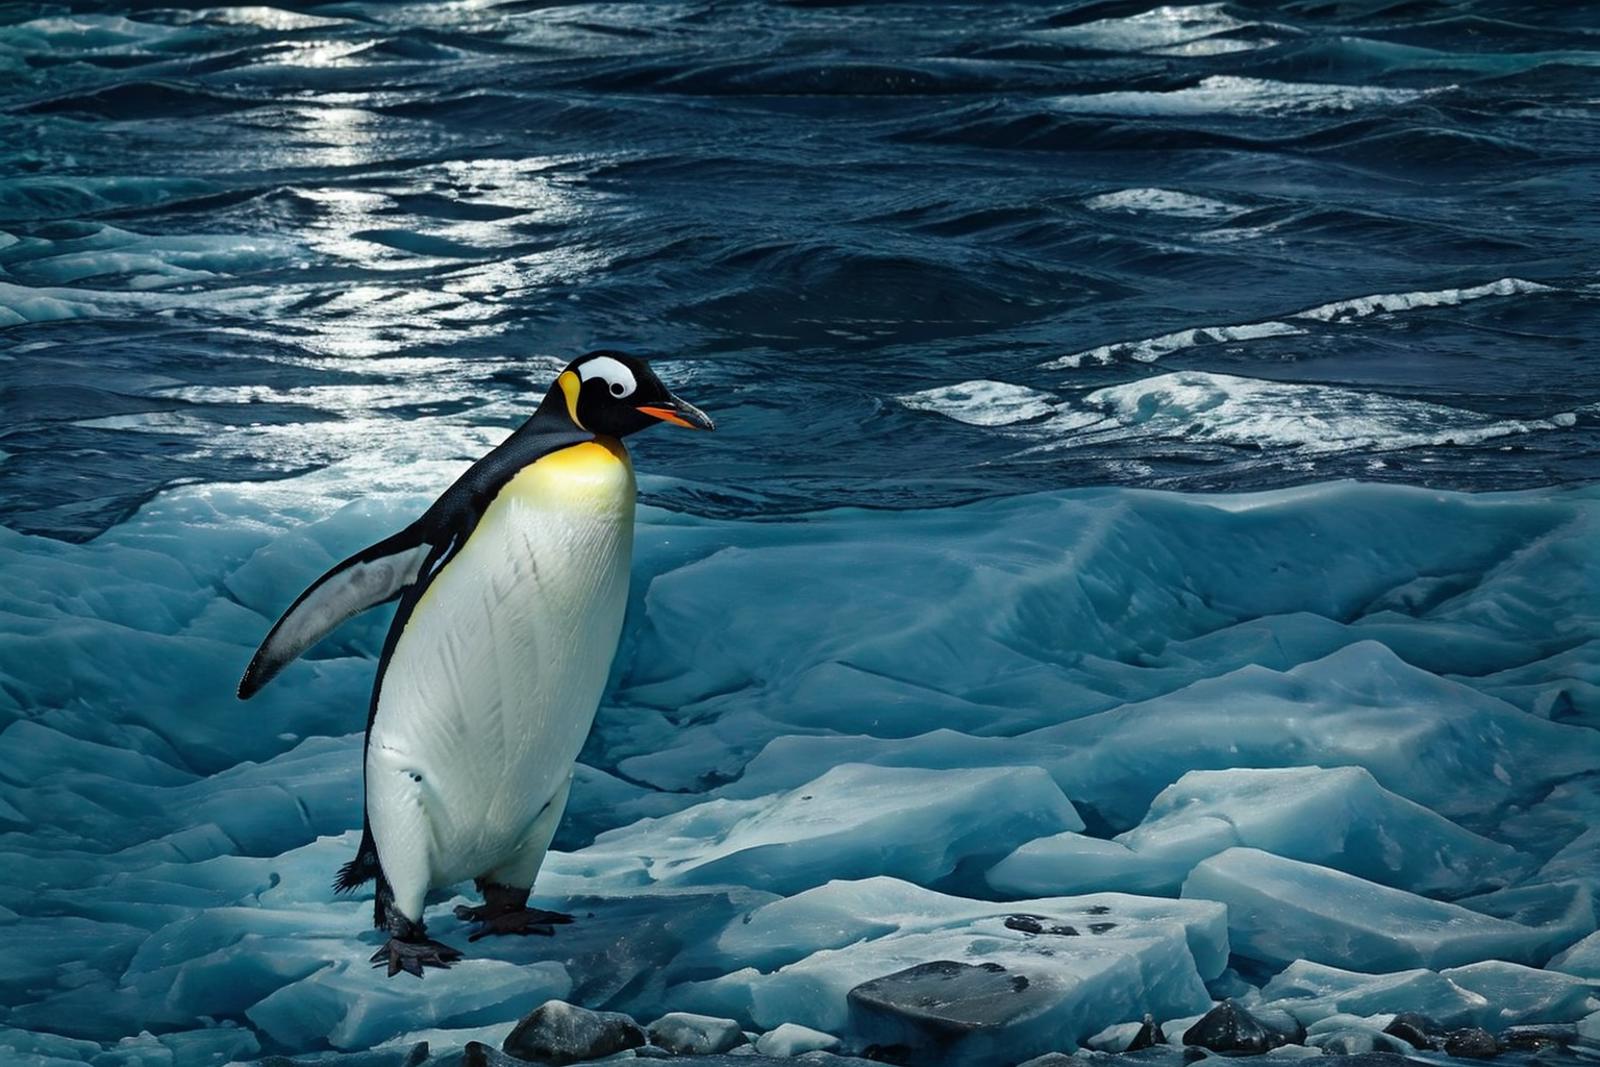 Polar animals image by HXZ_haixuanzi